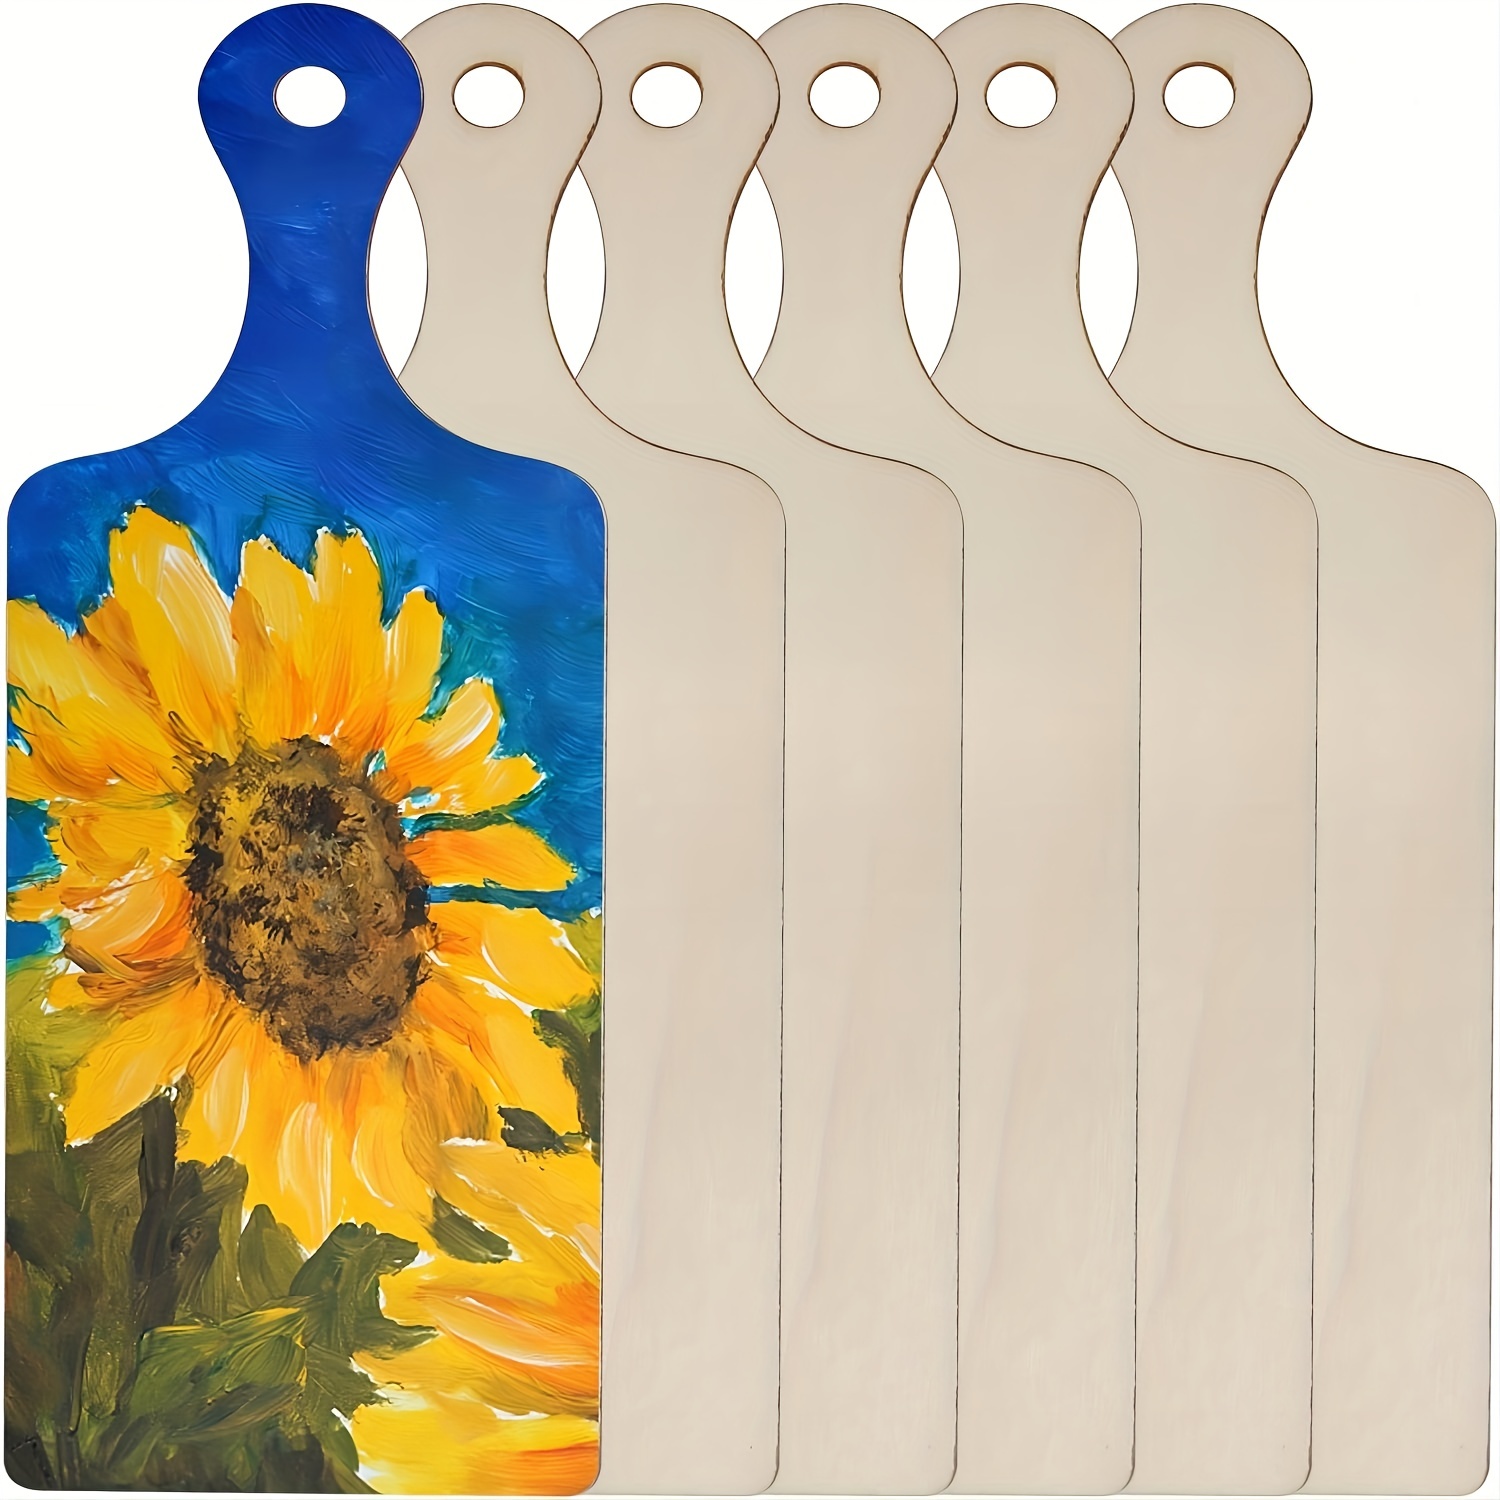 Sunflower cutting board / serving board